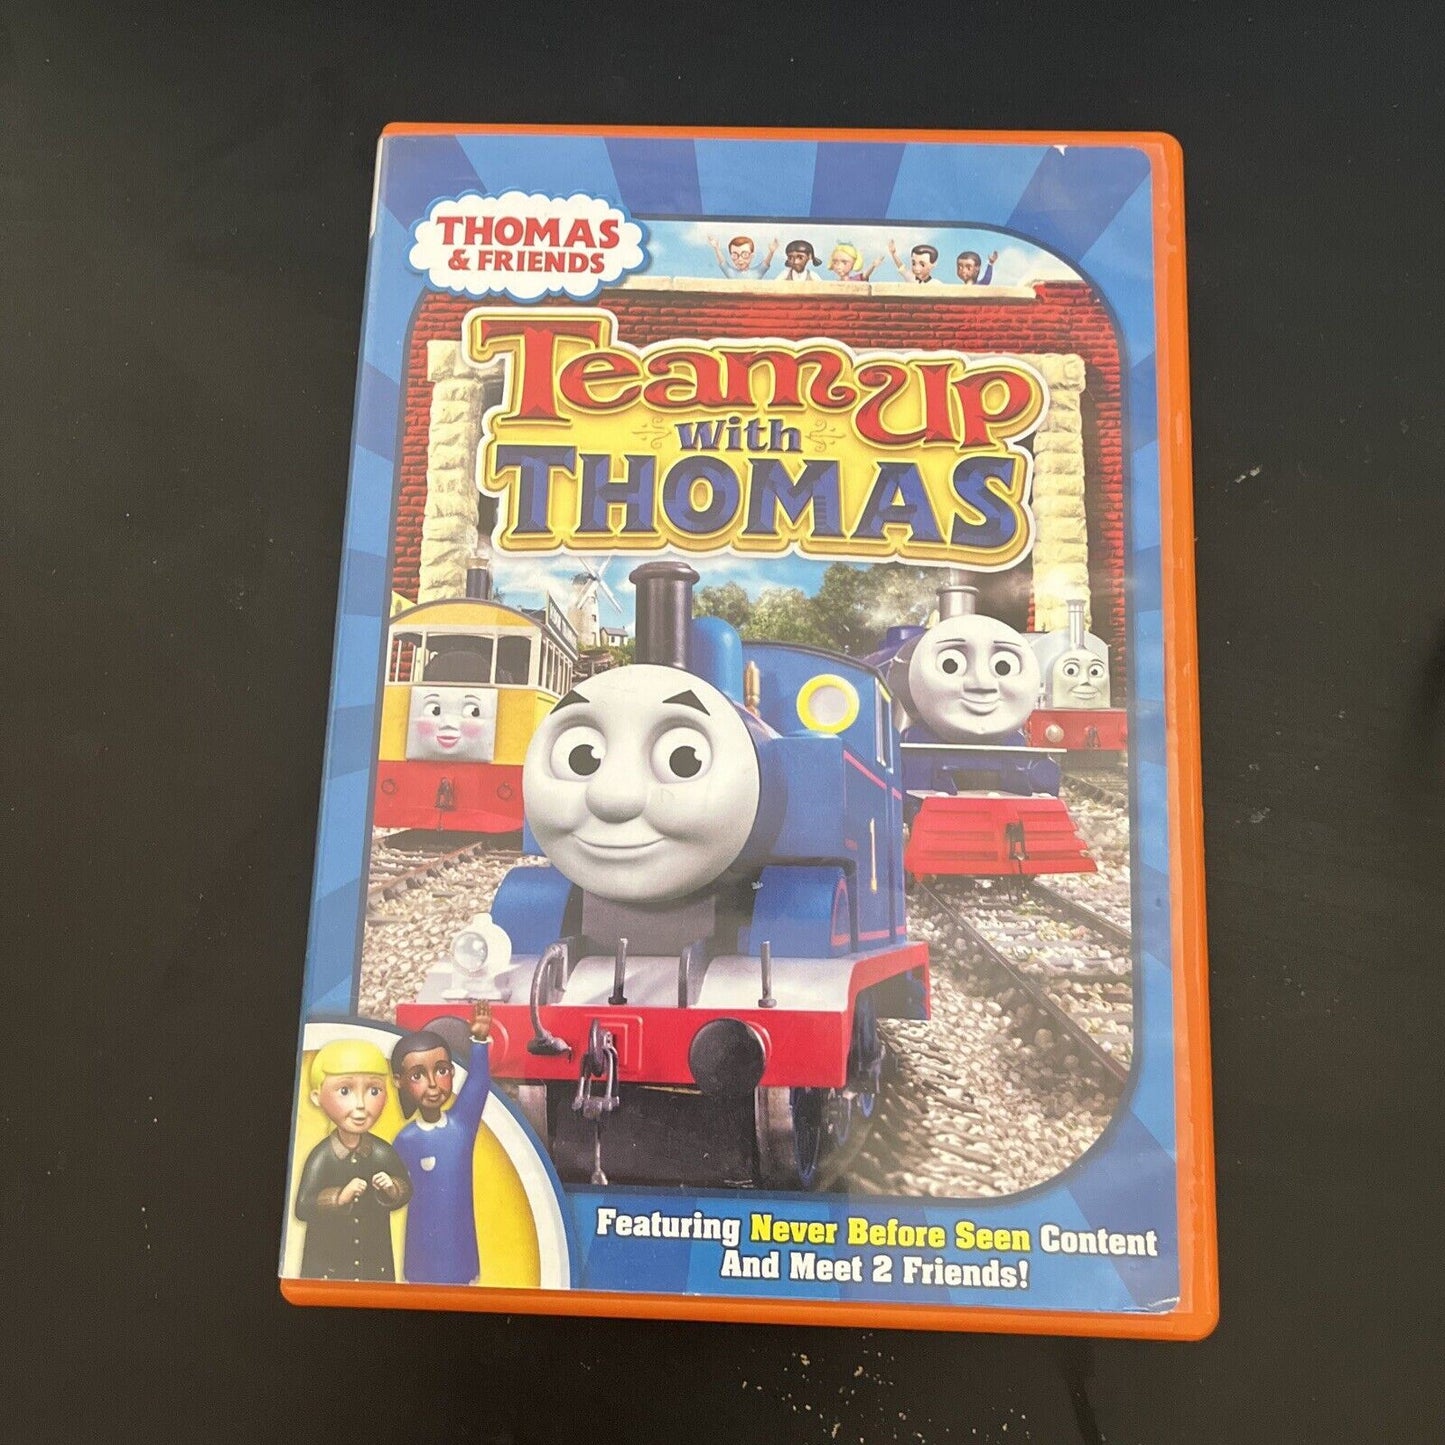 Thomas & Friends - Team up with Thomas (DVD, 2009) Region 1